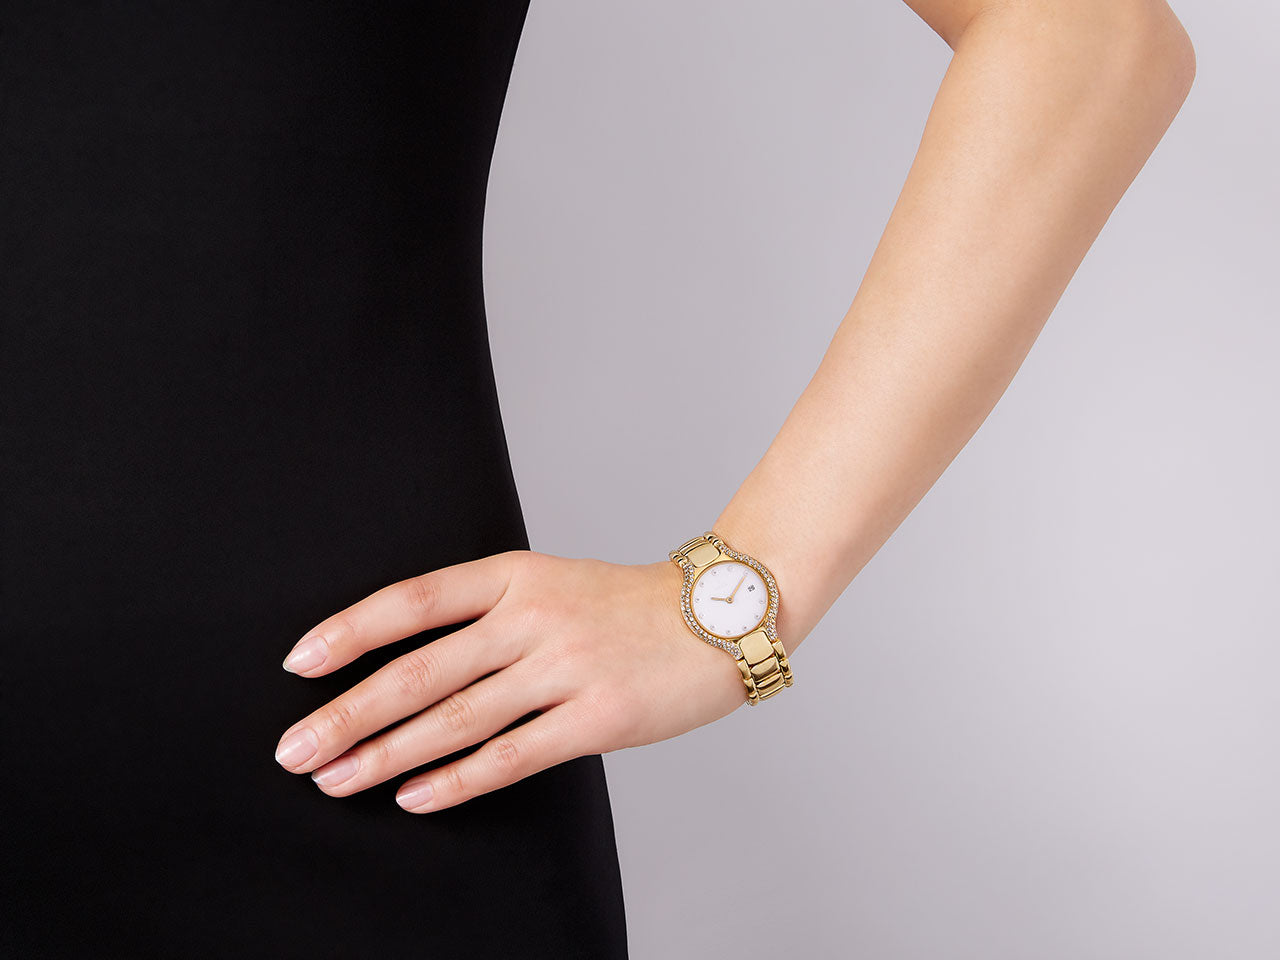 Ebel 'Beluga' Diamond Watch in 18K Gold, 31 mm